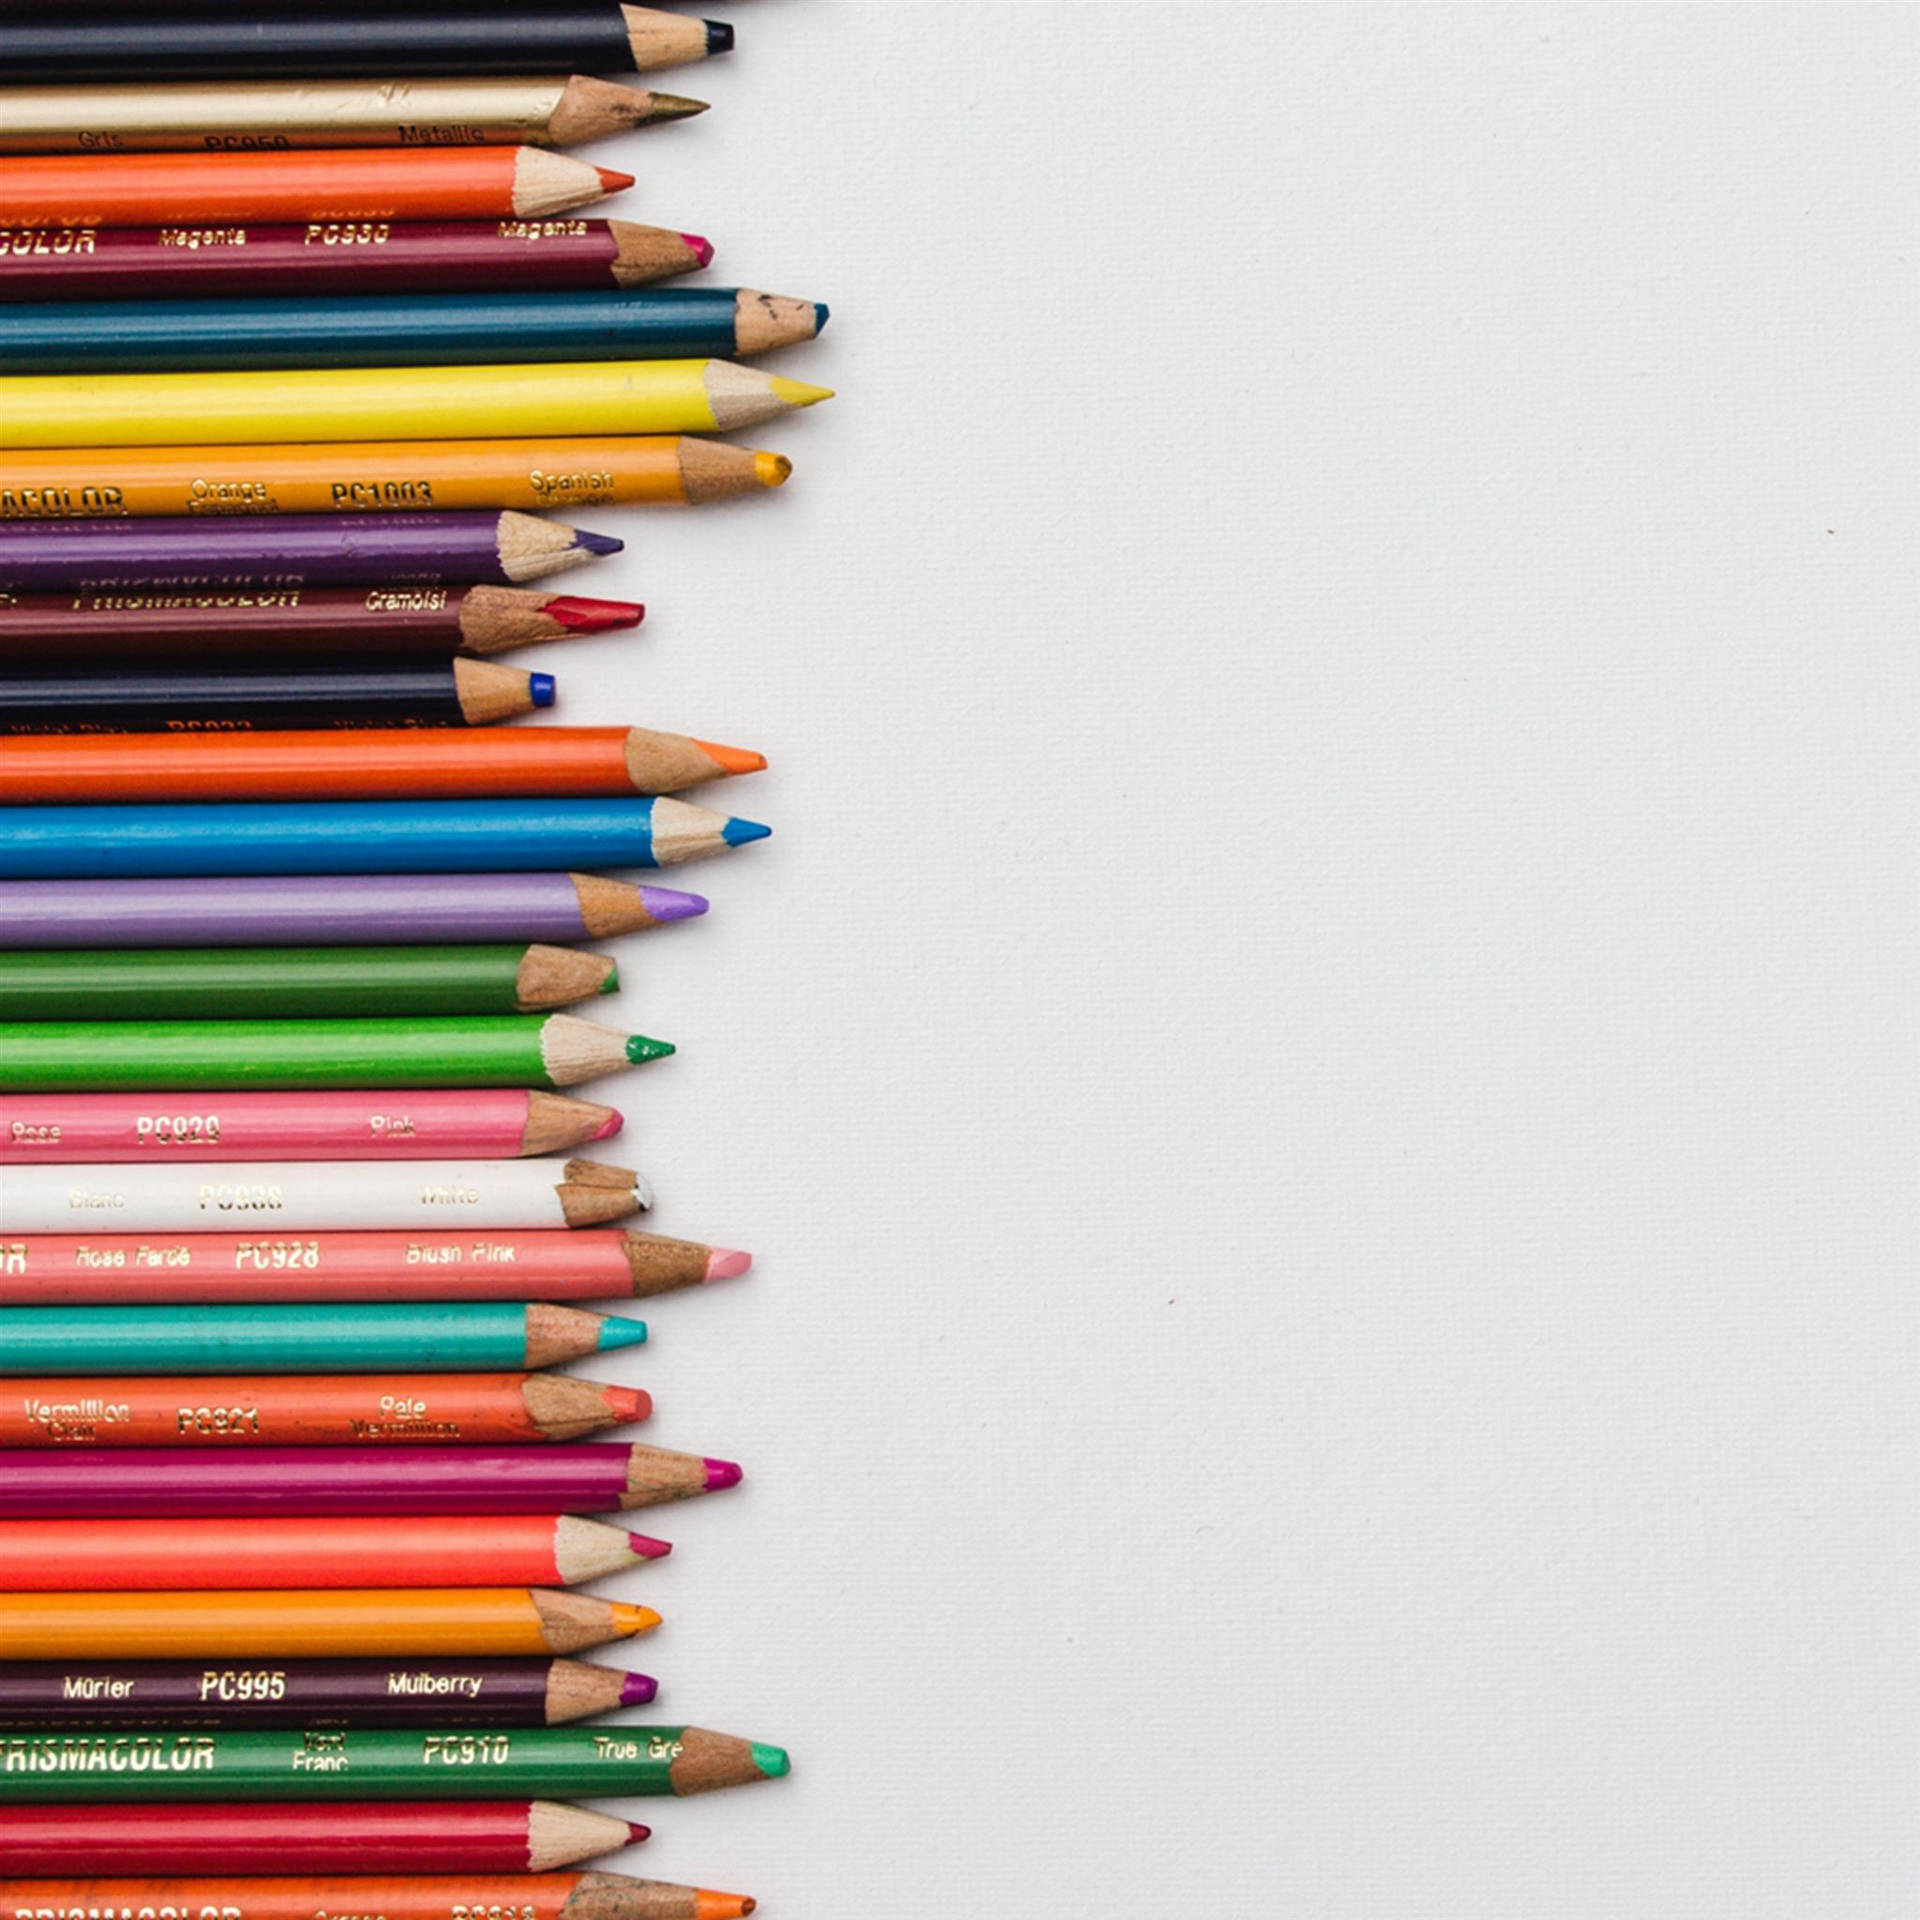 Ipad Pro 12.9 Colored Pencils Picture